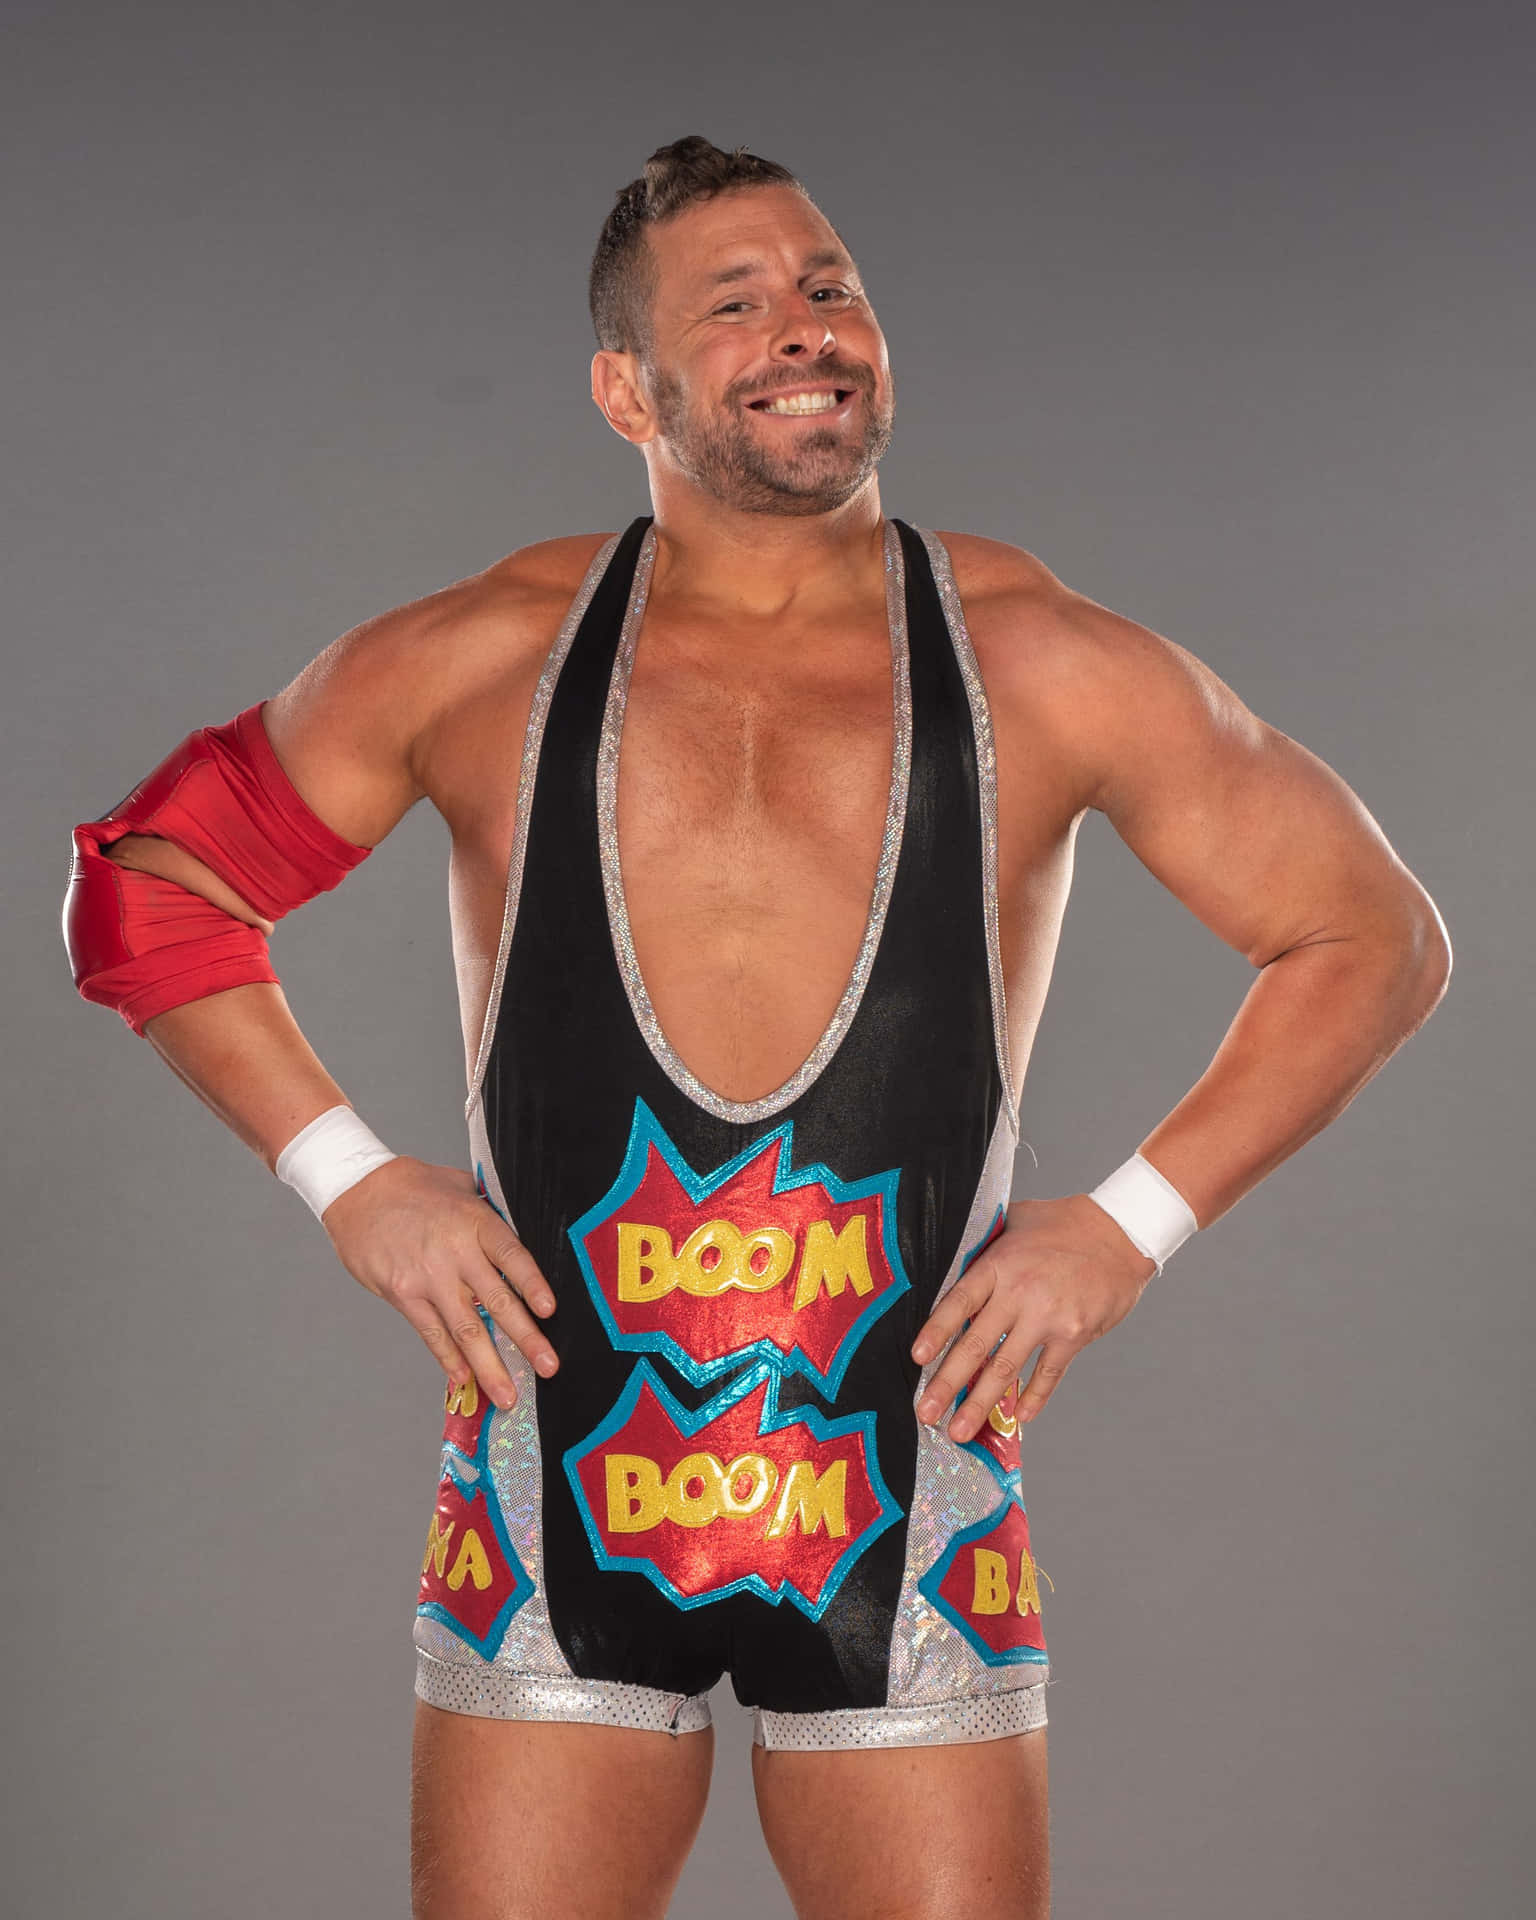 Colt Cabana Aew Professional Wrestler Picture